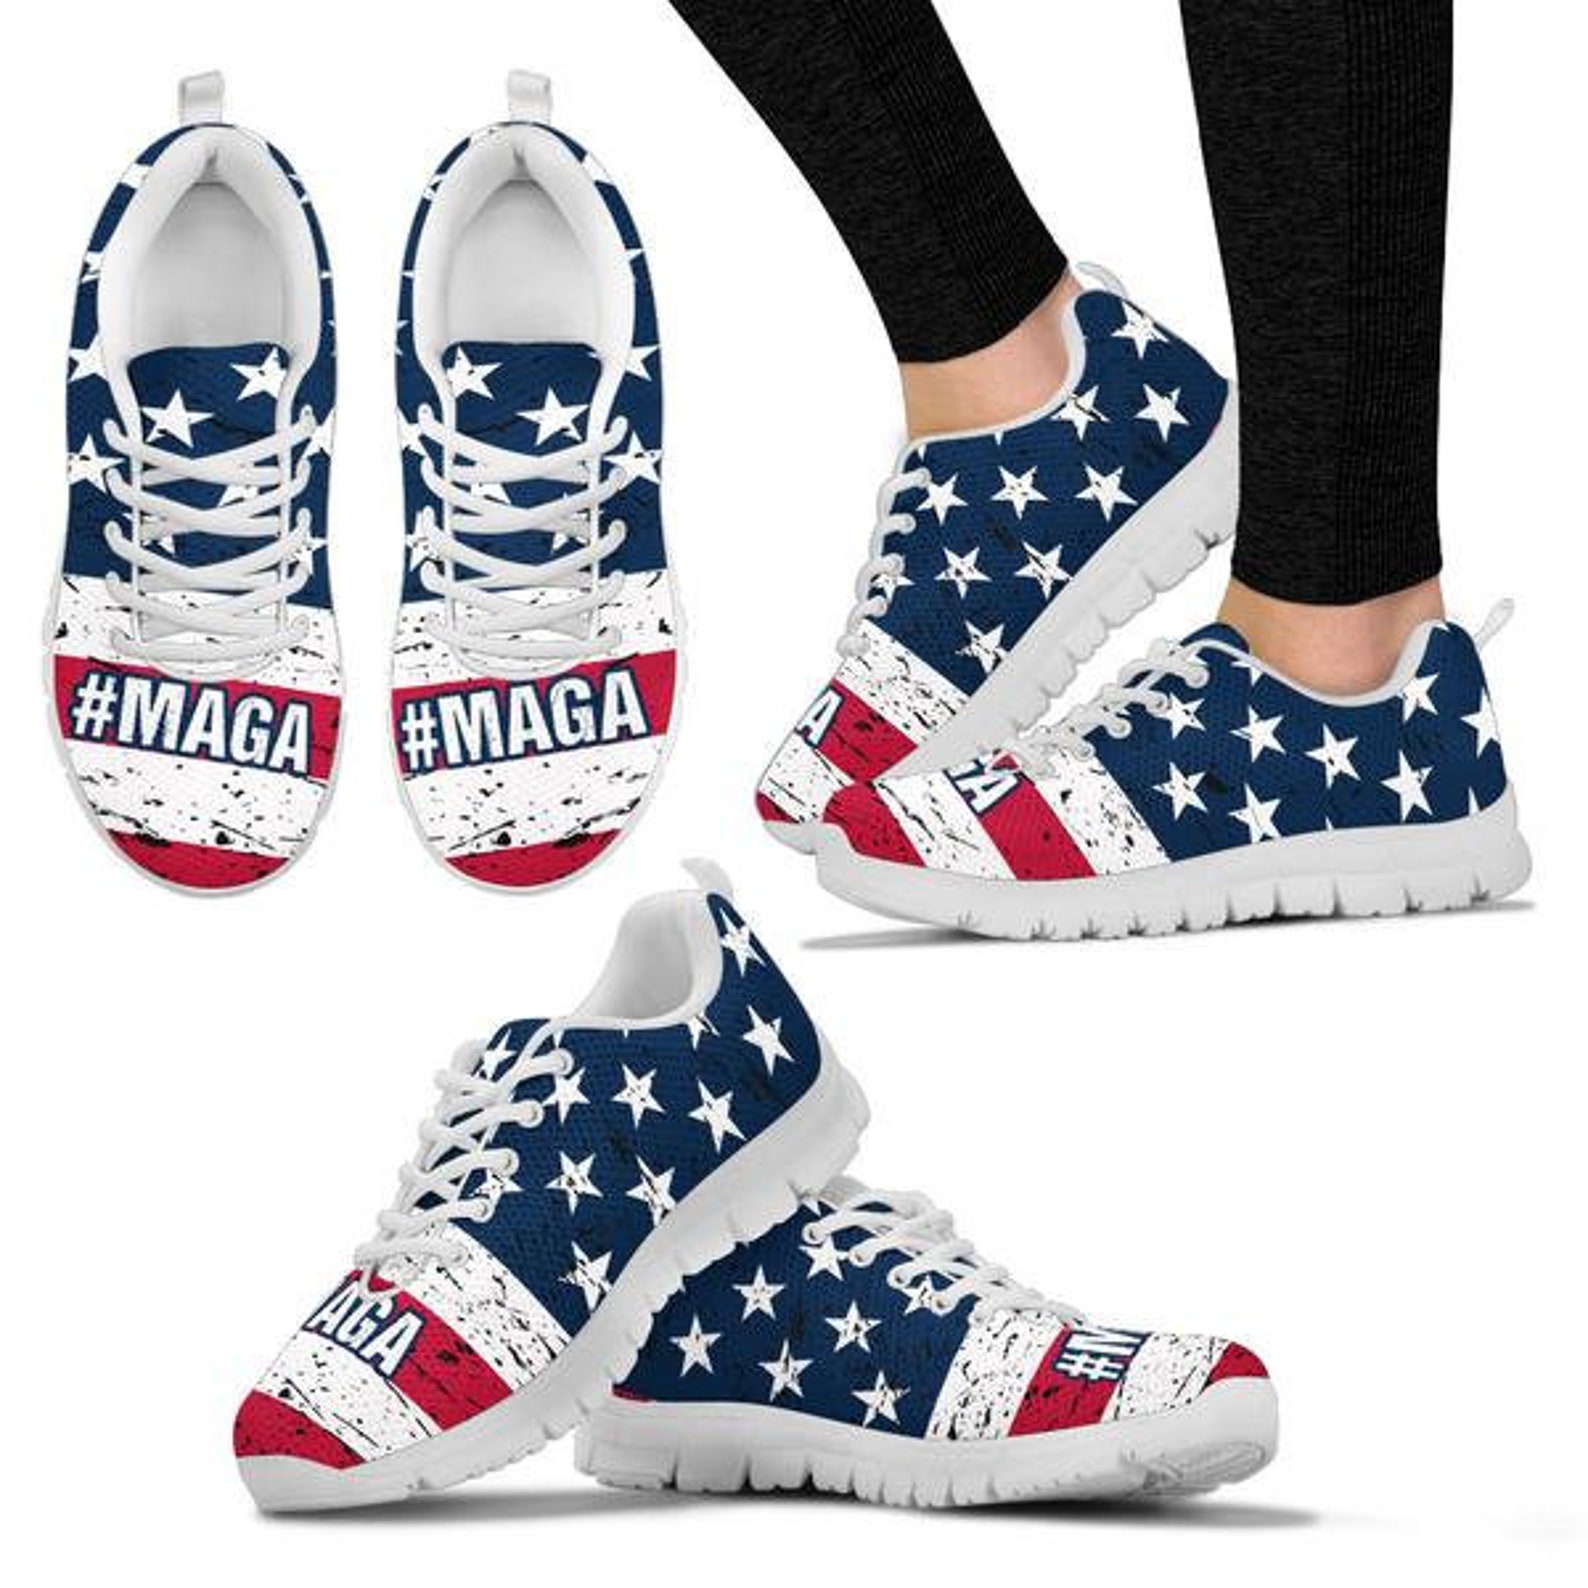 MAGA Sneakers Running Shoes For Men MAGA Trump Mens Shoes | Etsy